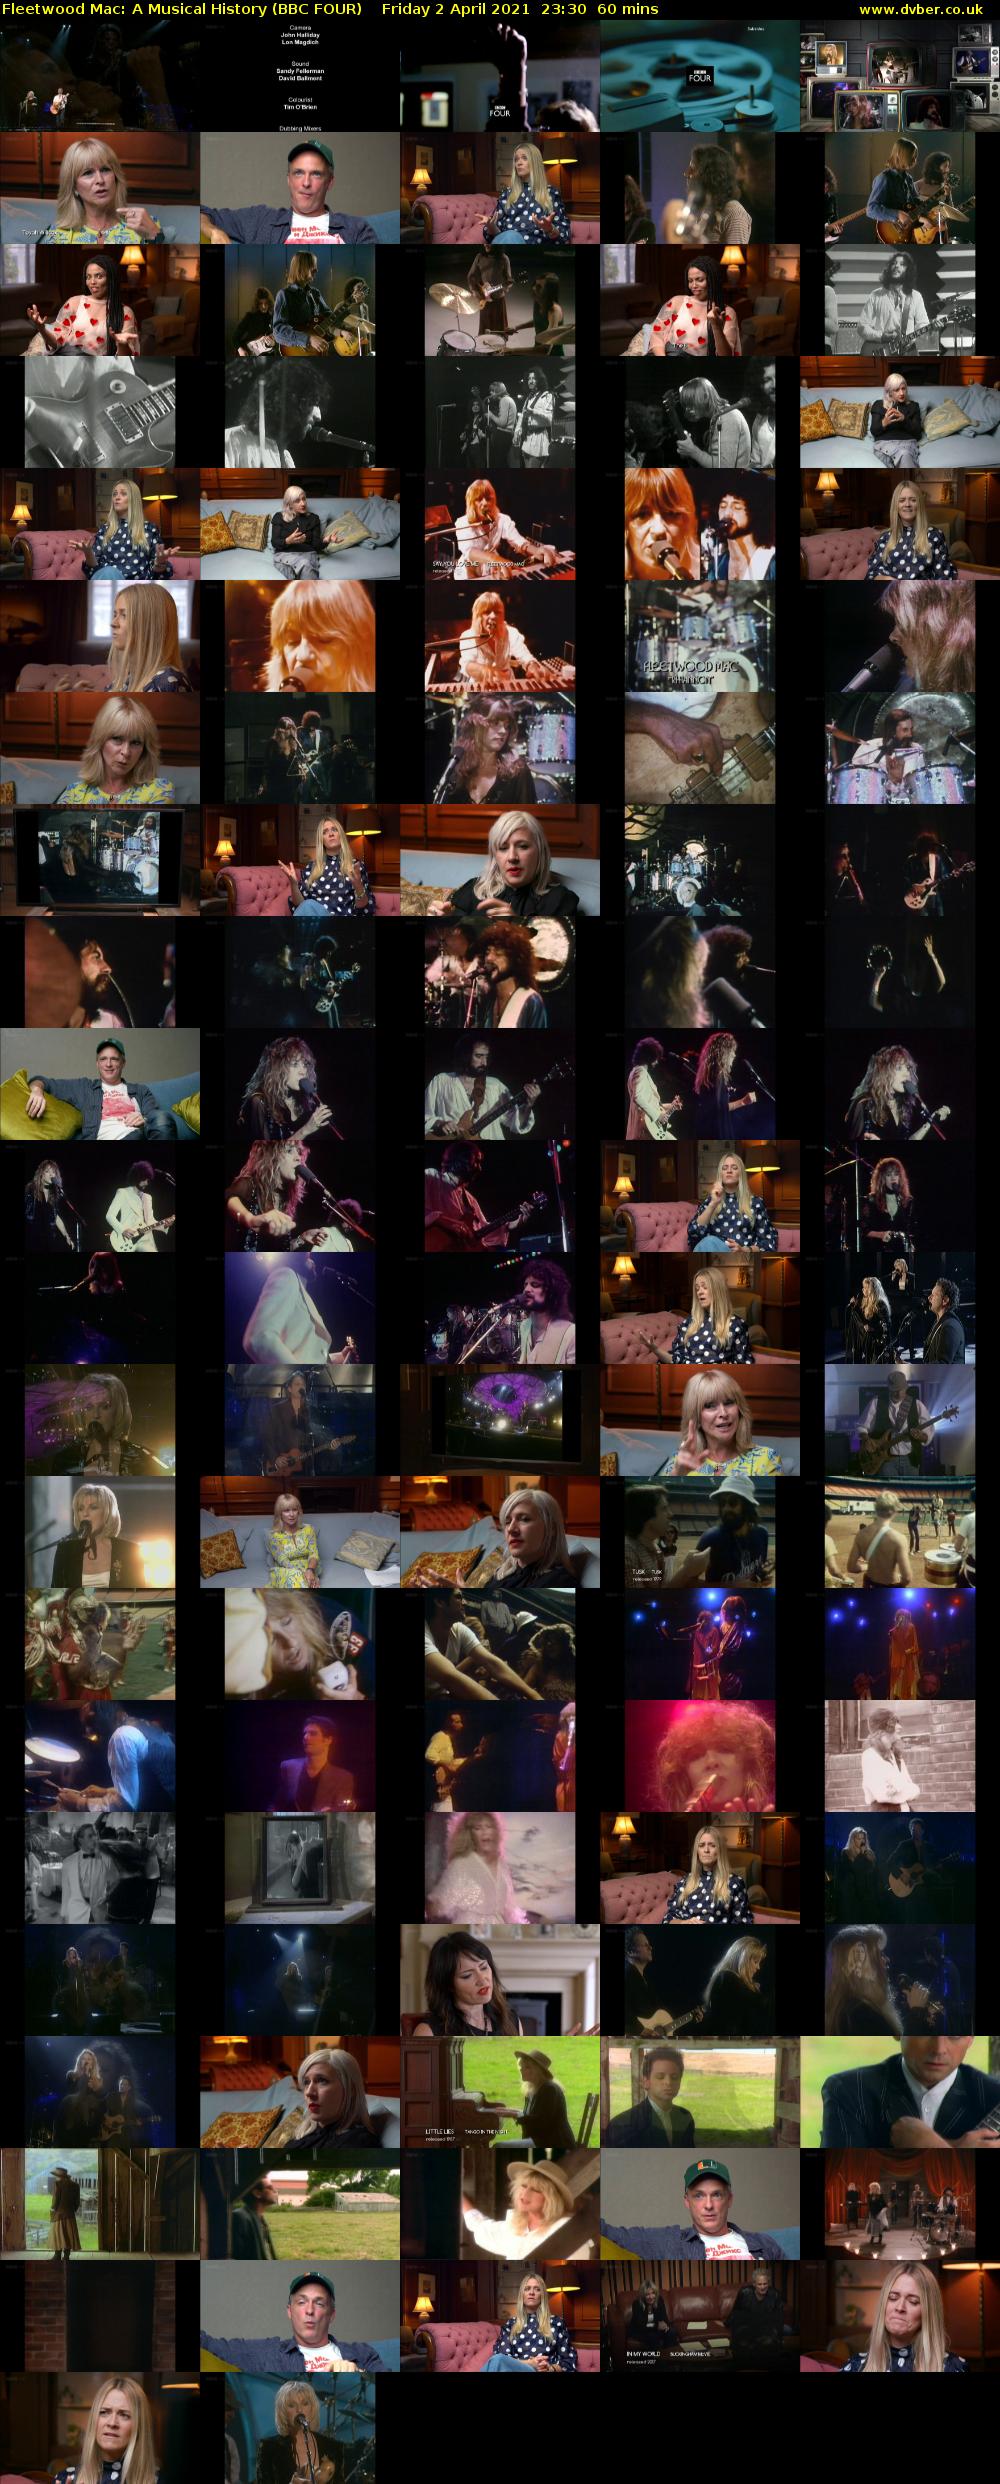 Fleetwood Mac: A Musical History (BBC FOUR) Friday 2 April 2021 23:30 - 00:30